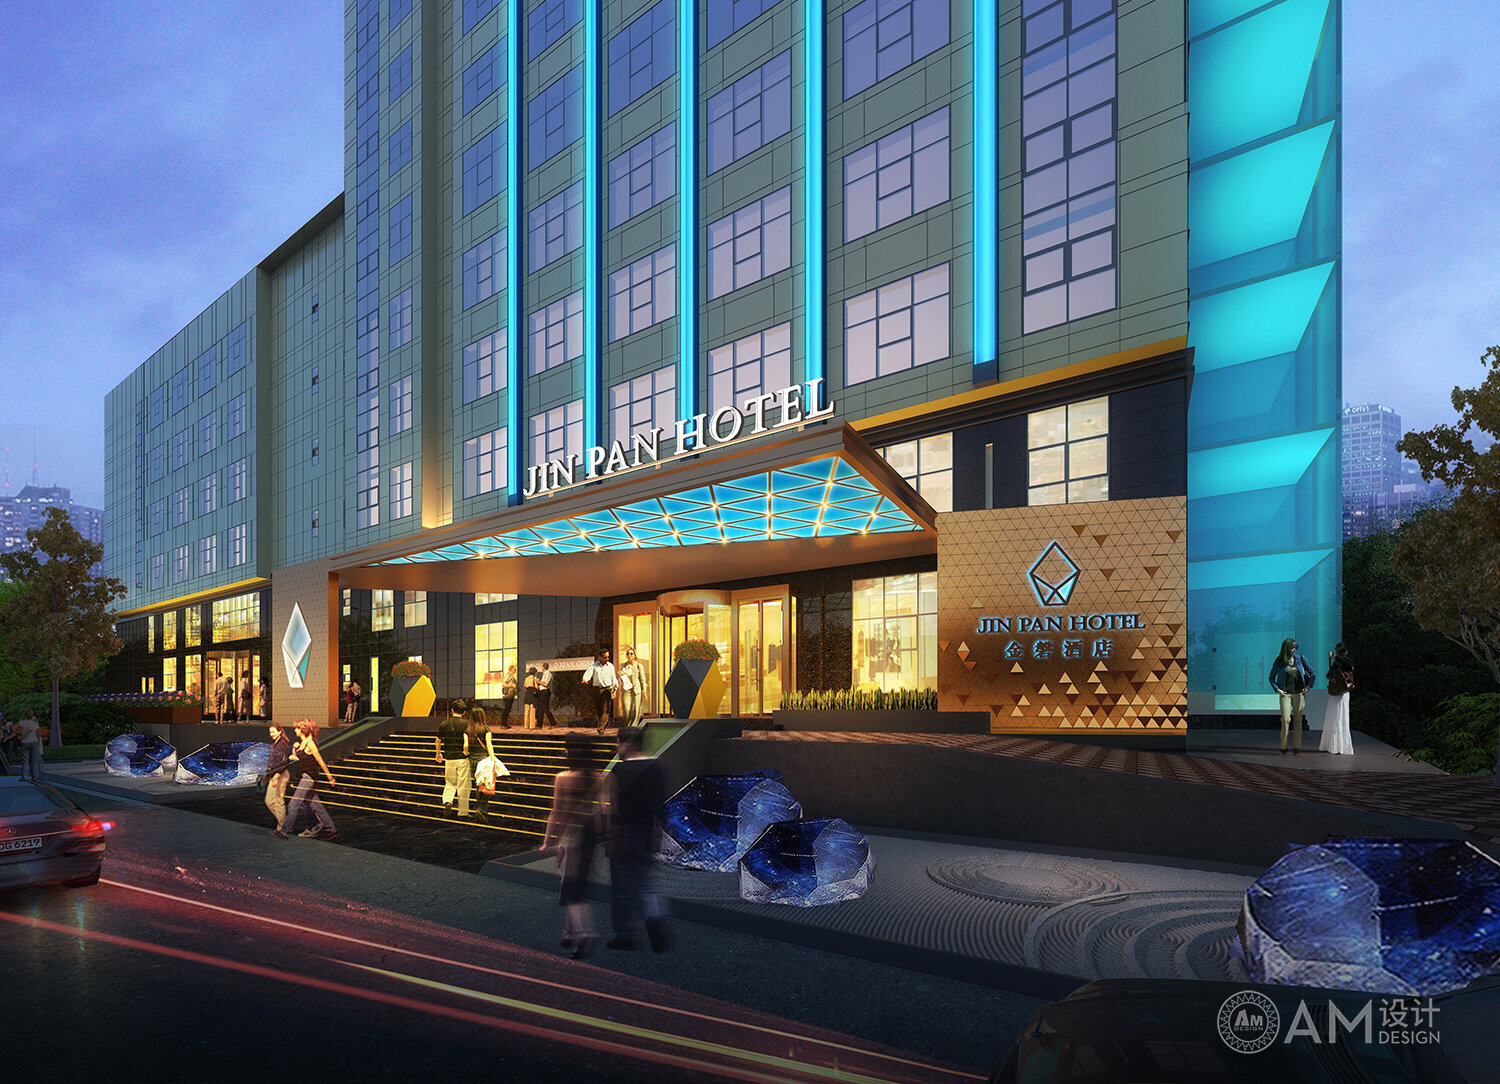 AM DESIGN | Architectural exterior design of Xi'an Jinpan Hotel